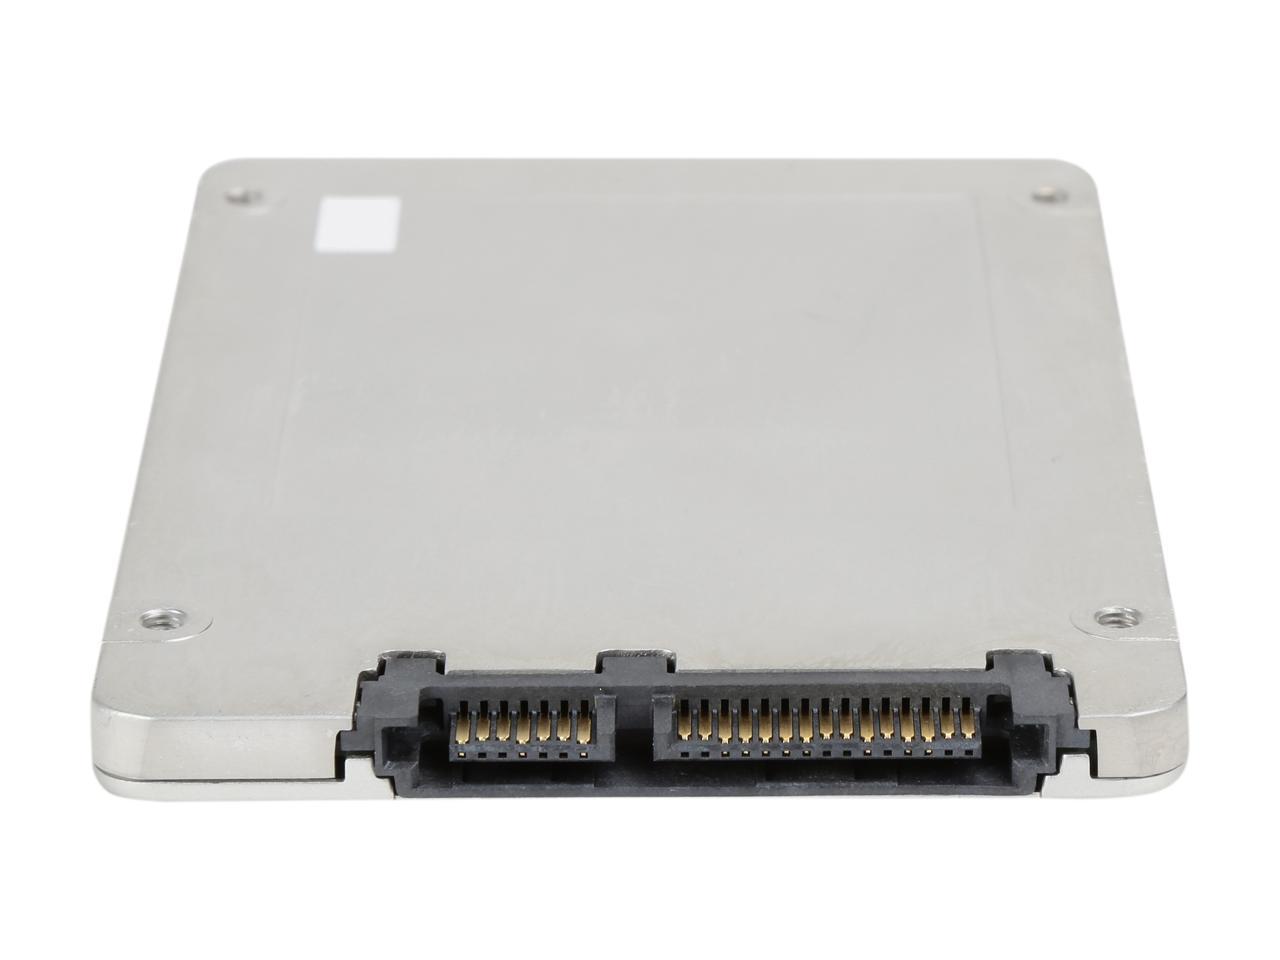 Intel DC S3510 2.5" 800GB SATA III MLC Enterprise Solid State Drive